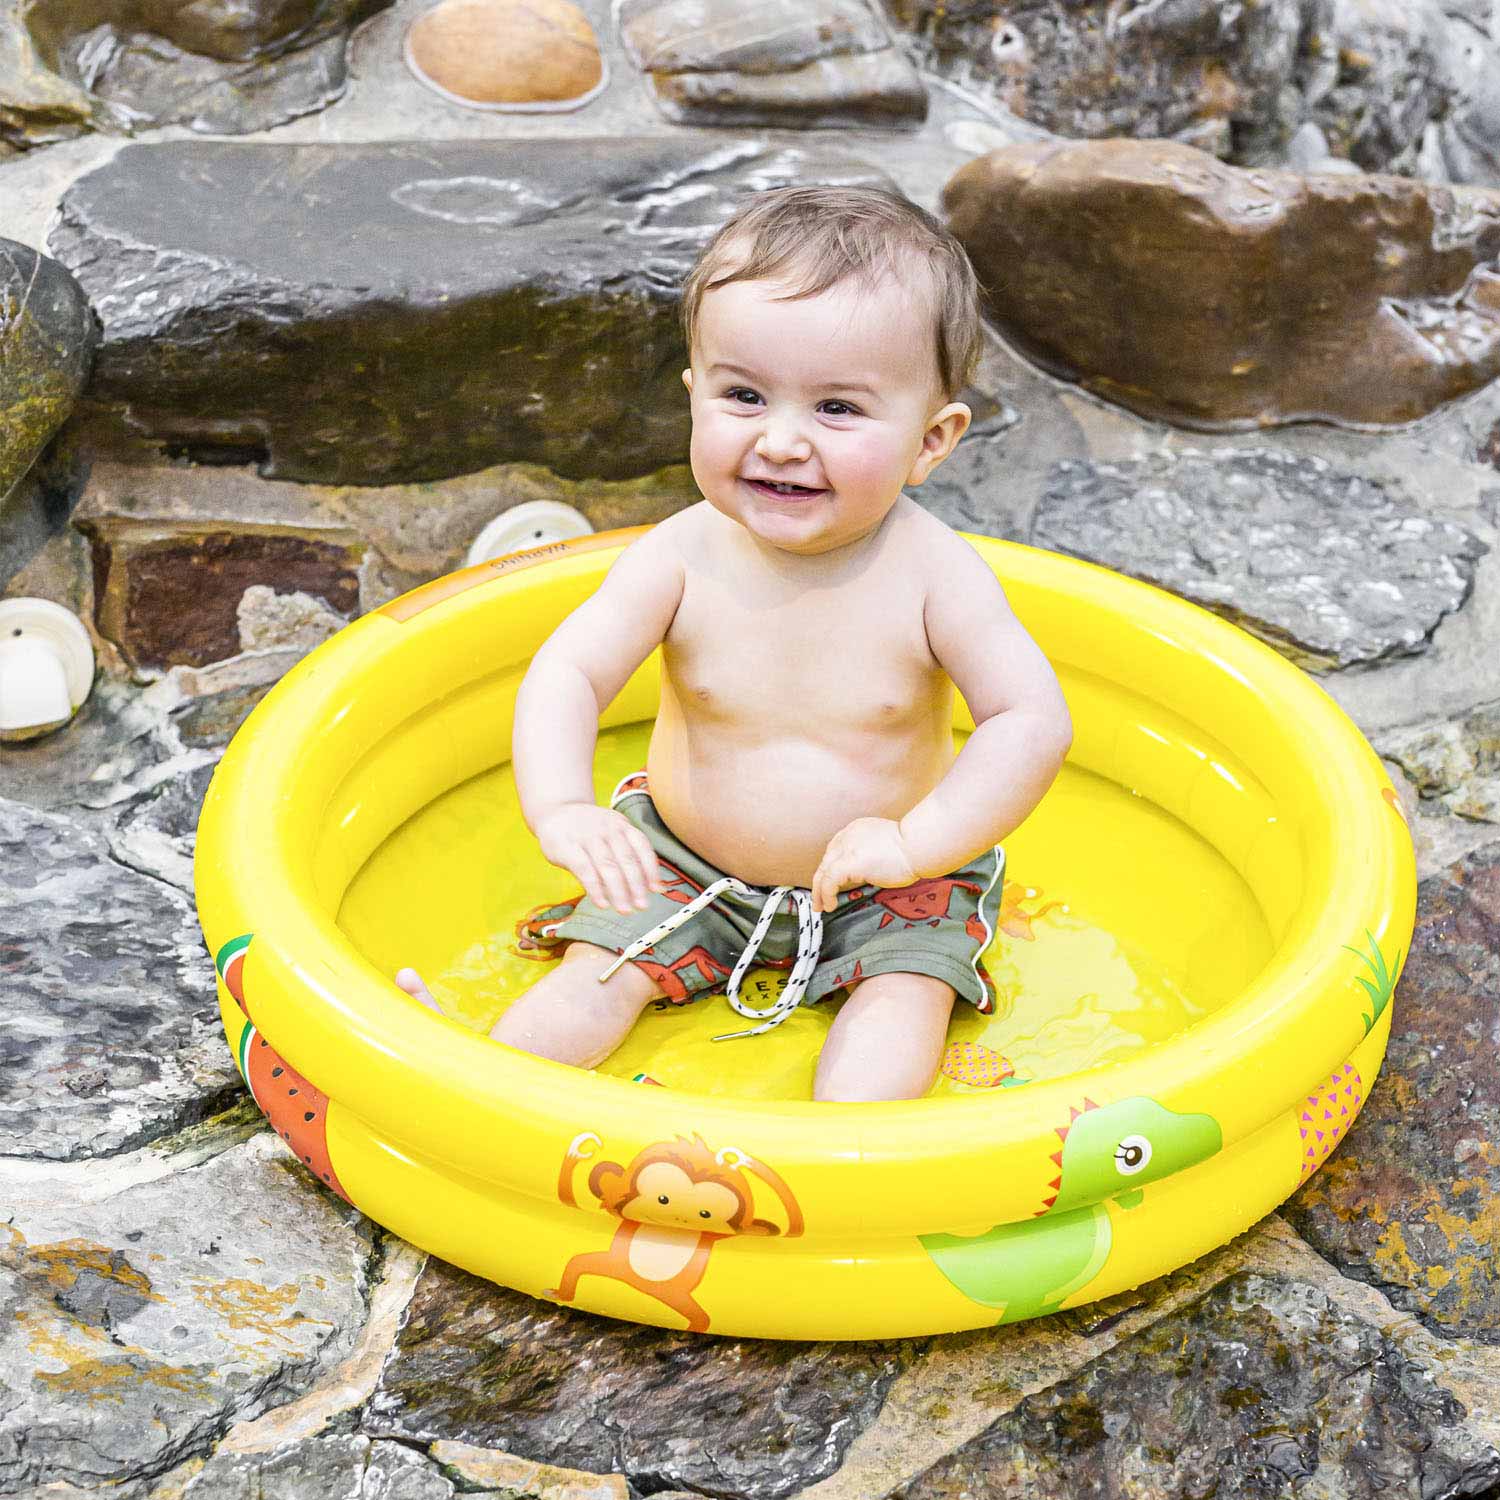 Swim Essentials Baby Zwembad Geel, 60cm